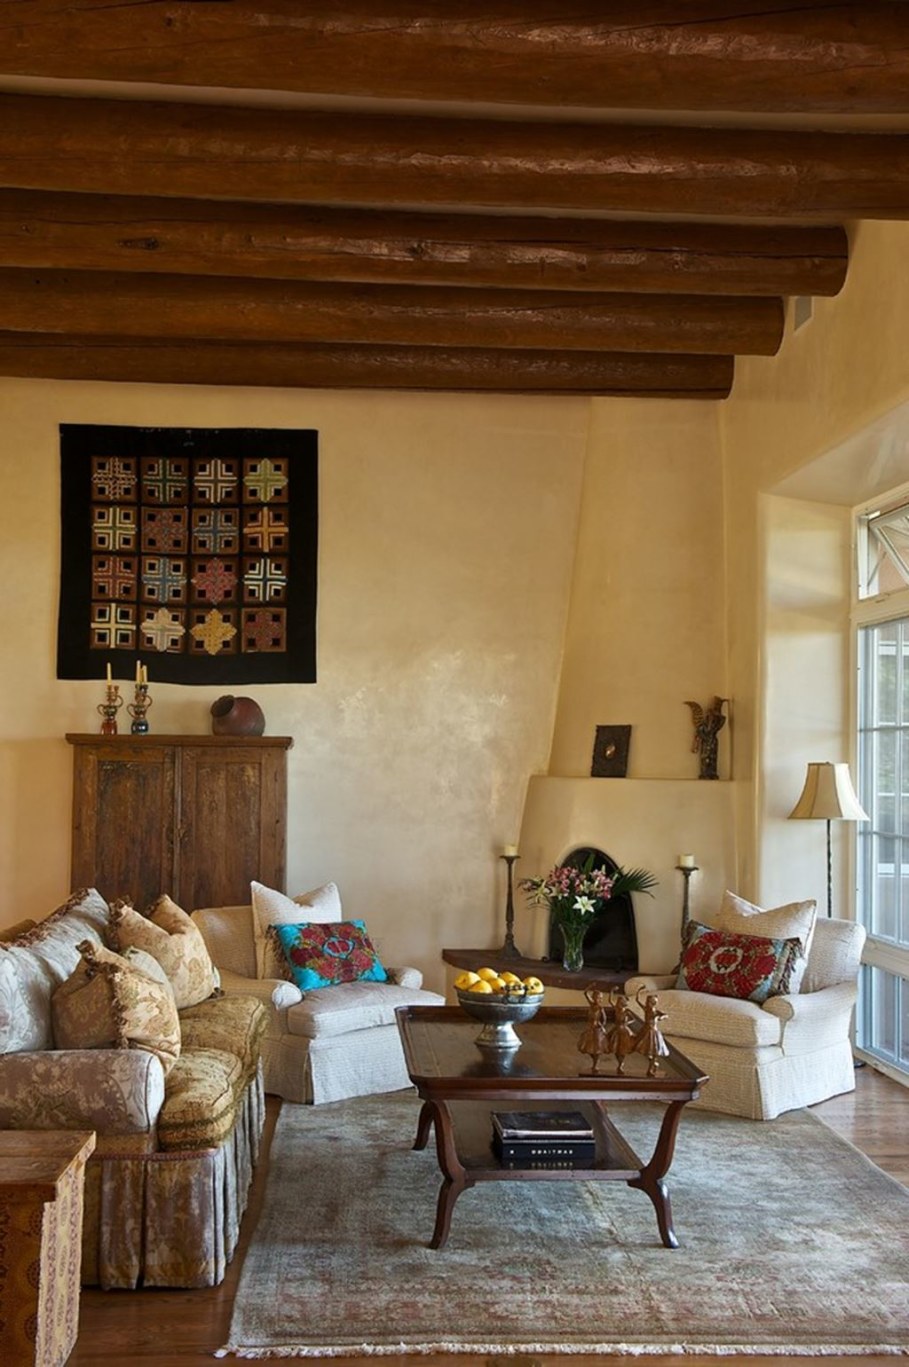 MediterraneanStyle living room design ideas